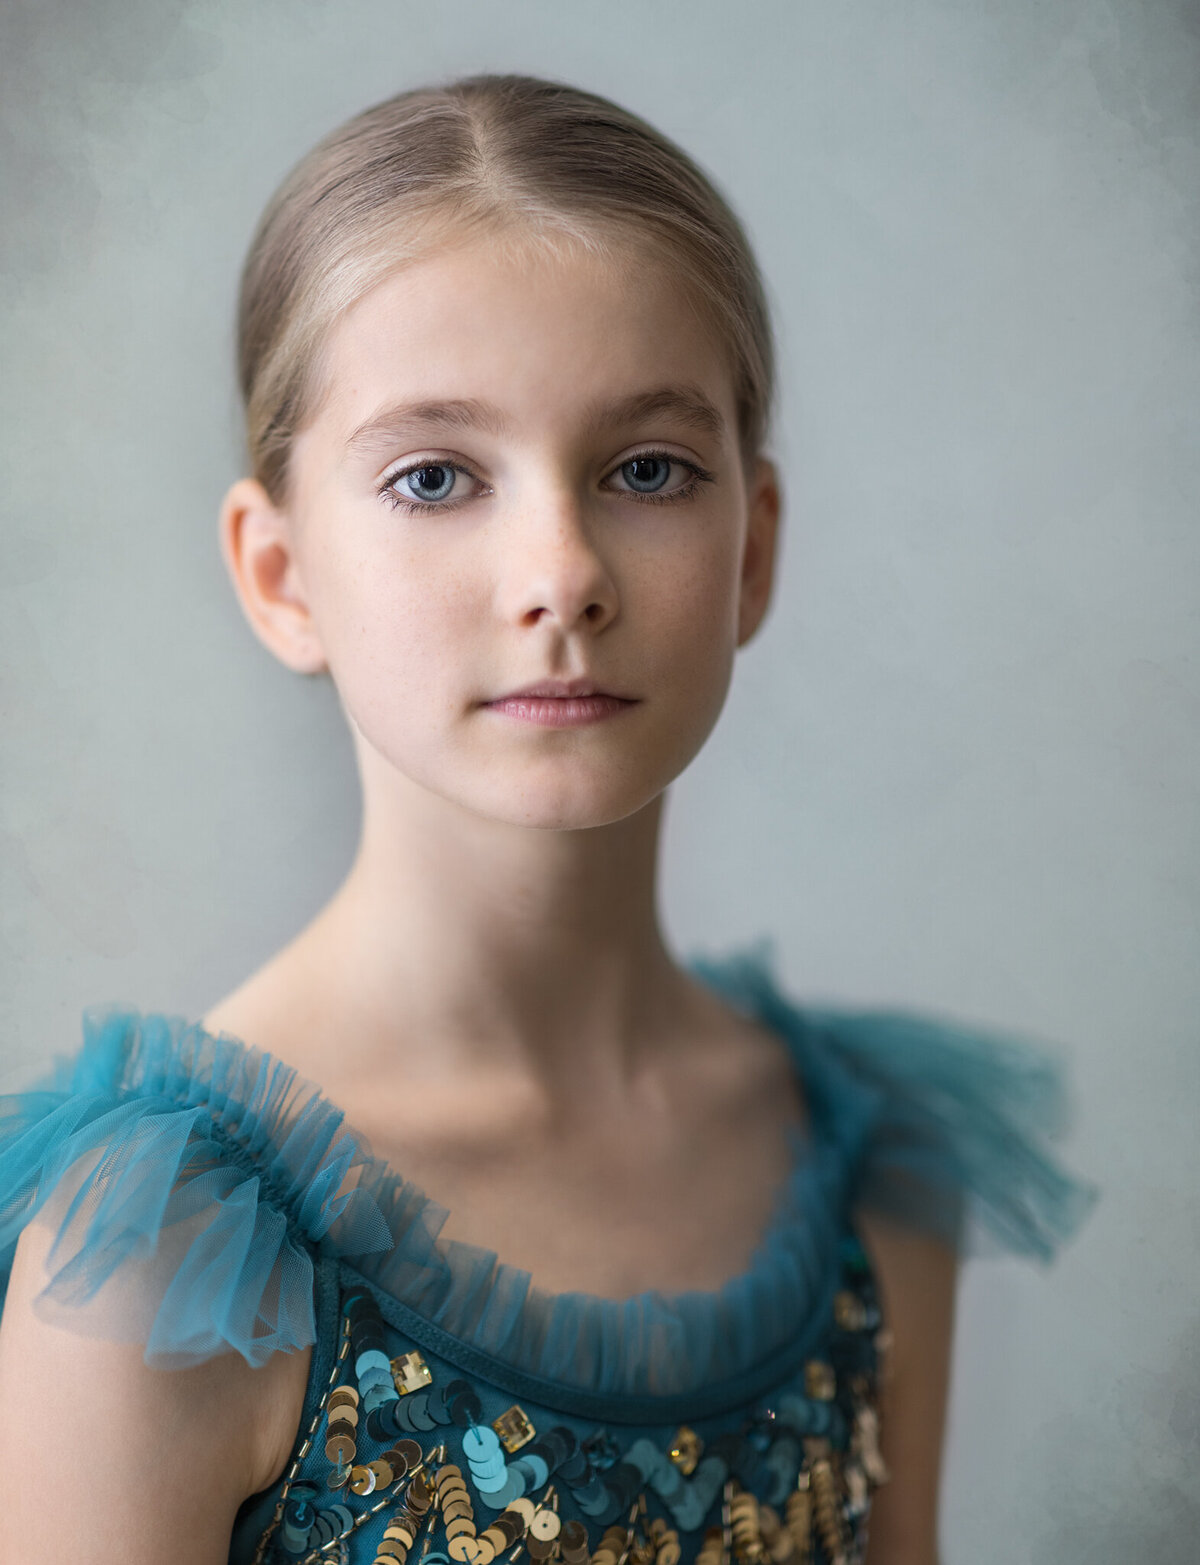 A studio headshot of ballet dancer wearing tulle dress